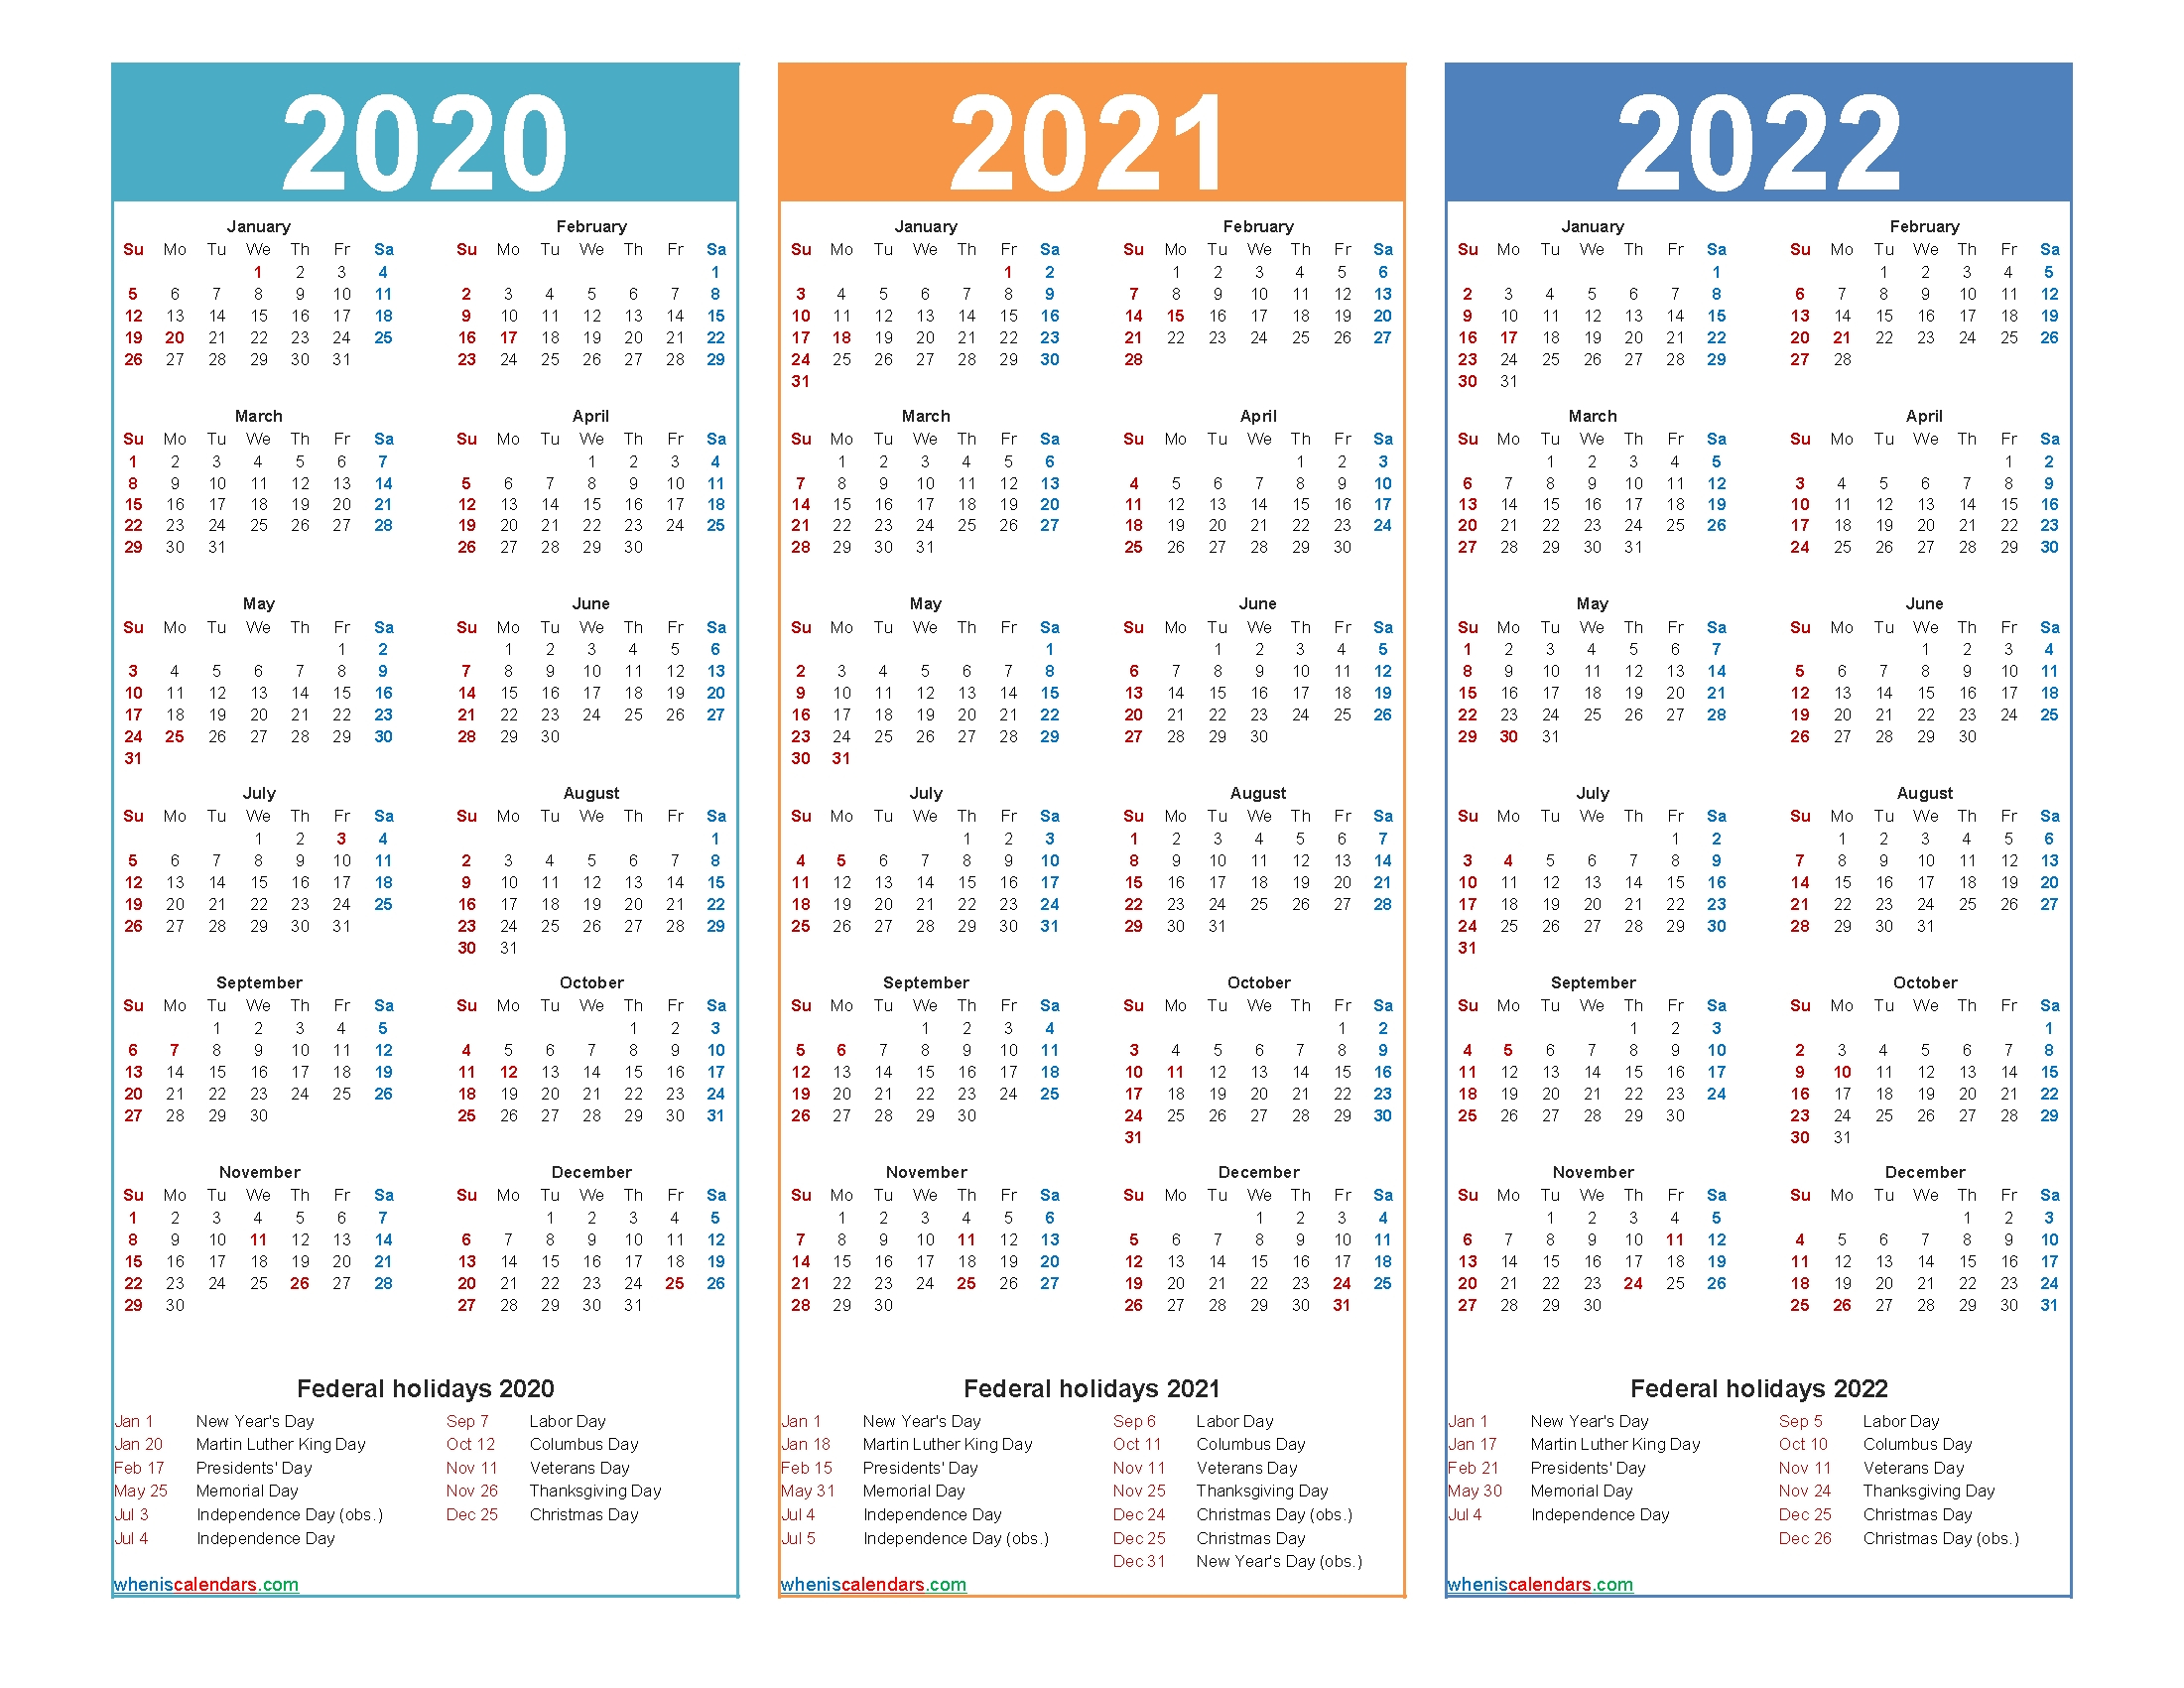 Calendars In 2020 2021 And 2022 - Calendar Inspiration Design